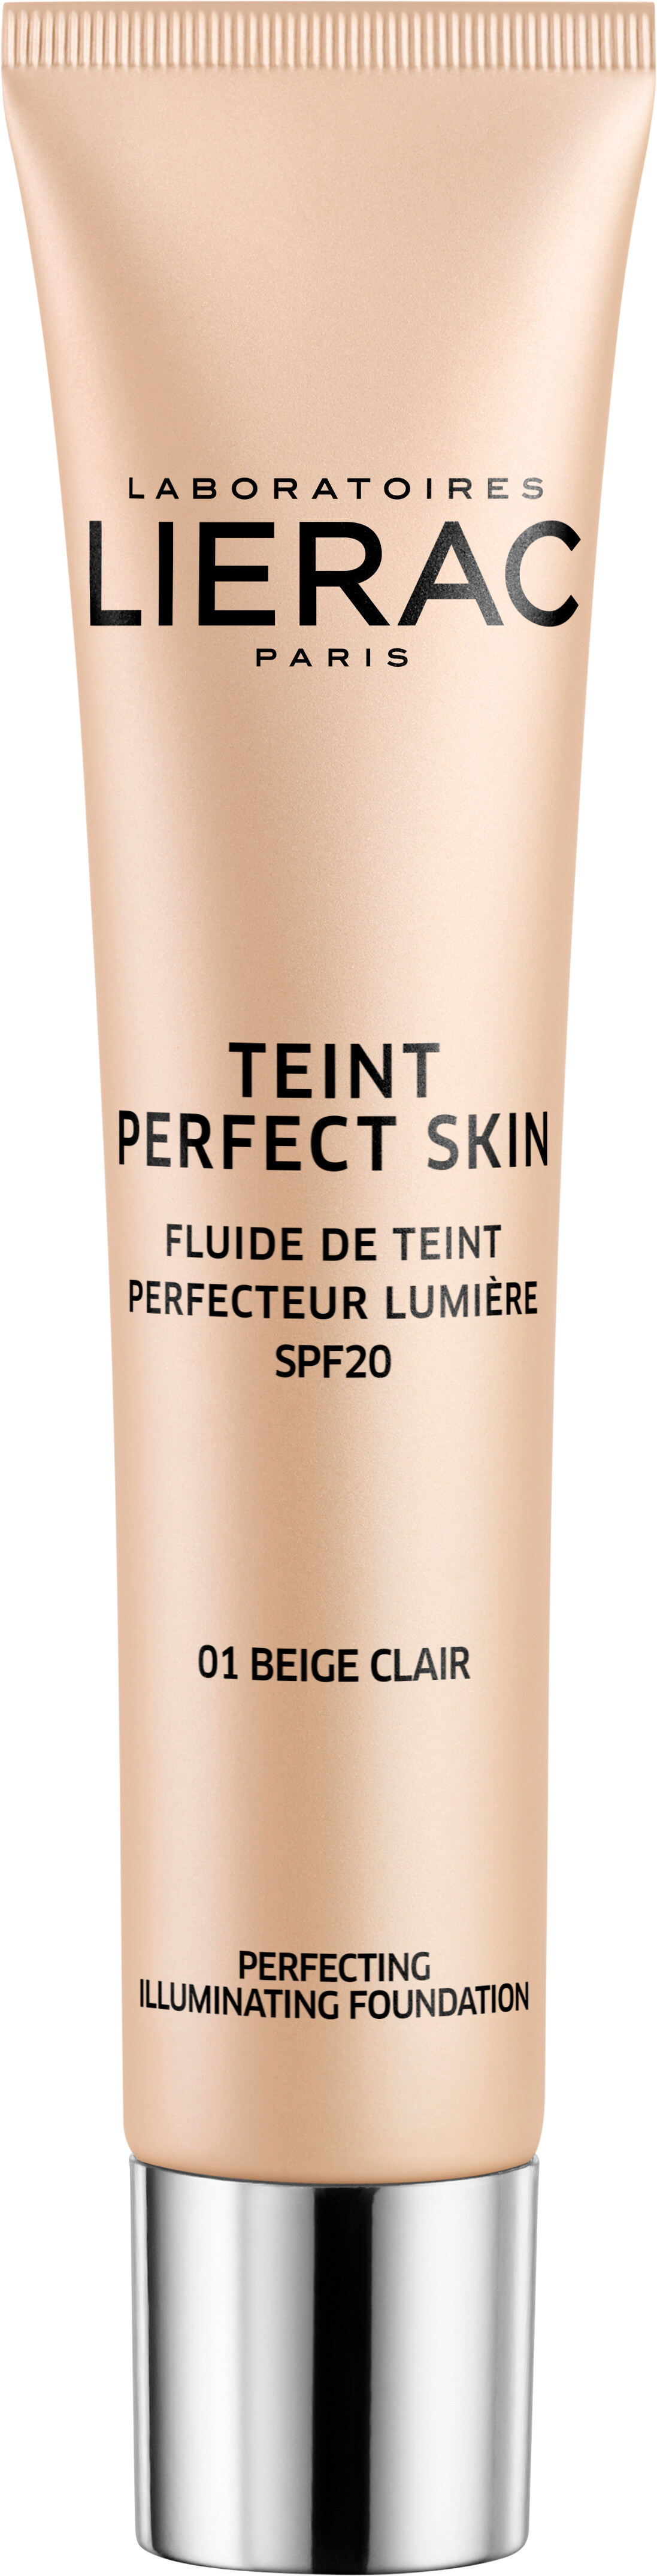 Lierac Teint Perfect Skin Perfecting Illuminating Fluid SPF20 30ml 01 - Light Beige